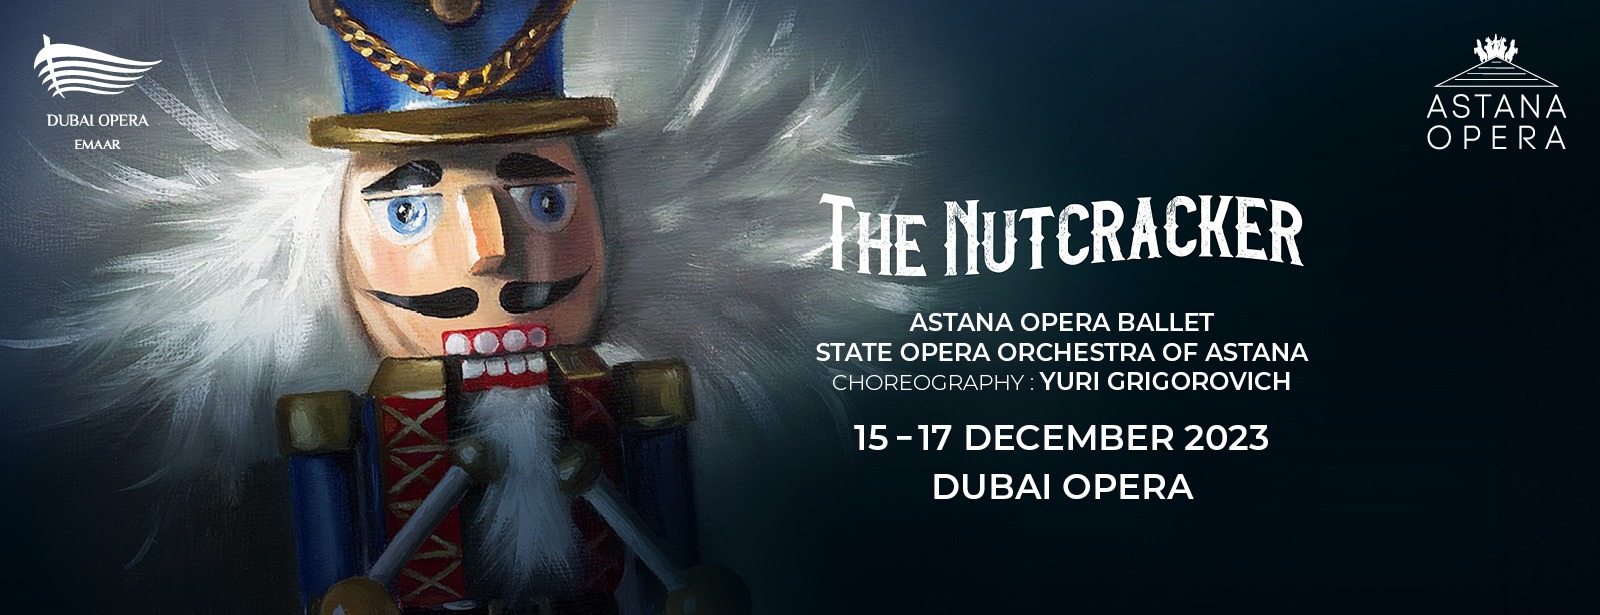 The Nutcracker at Dubai Opera - Coming Soon in UAE